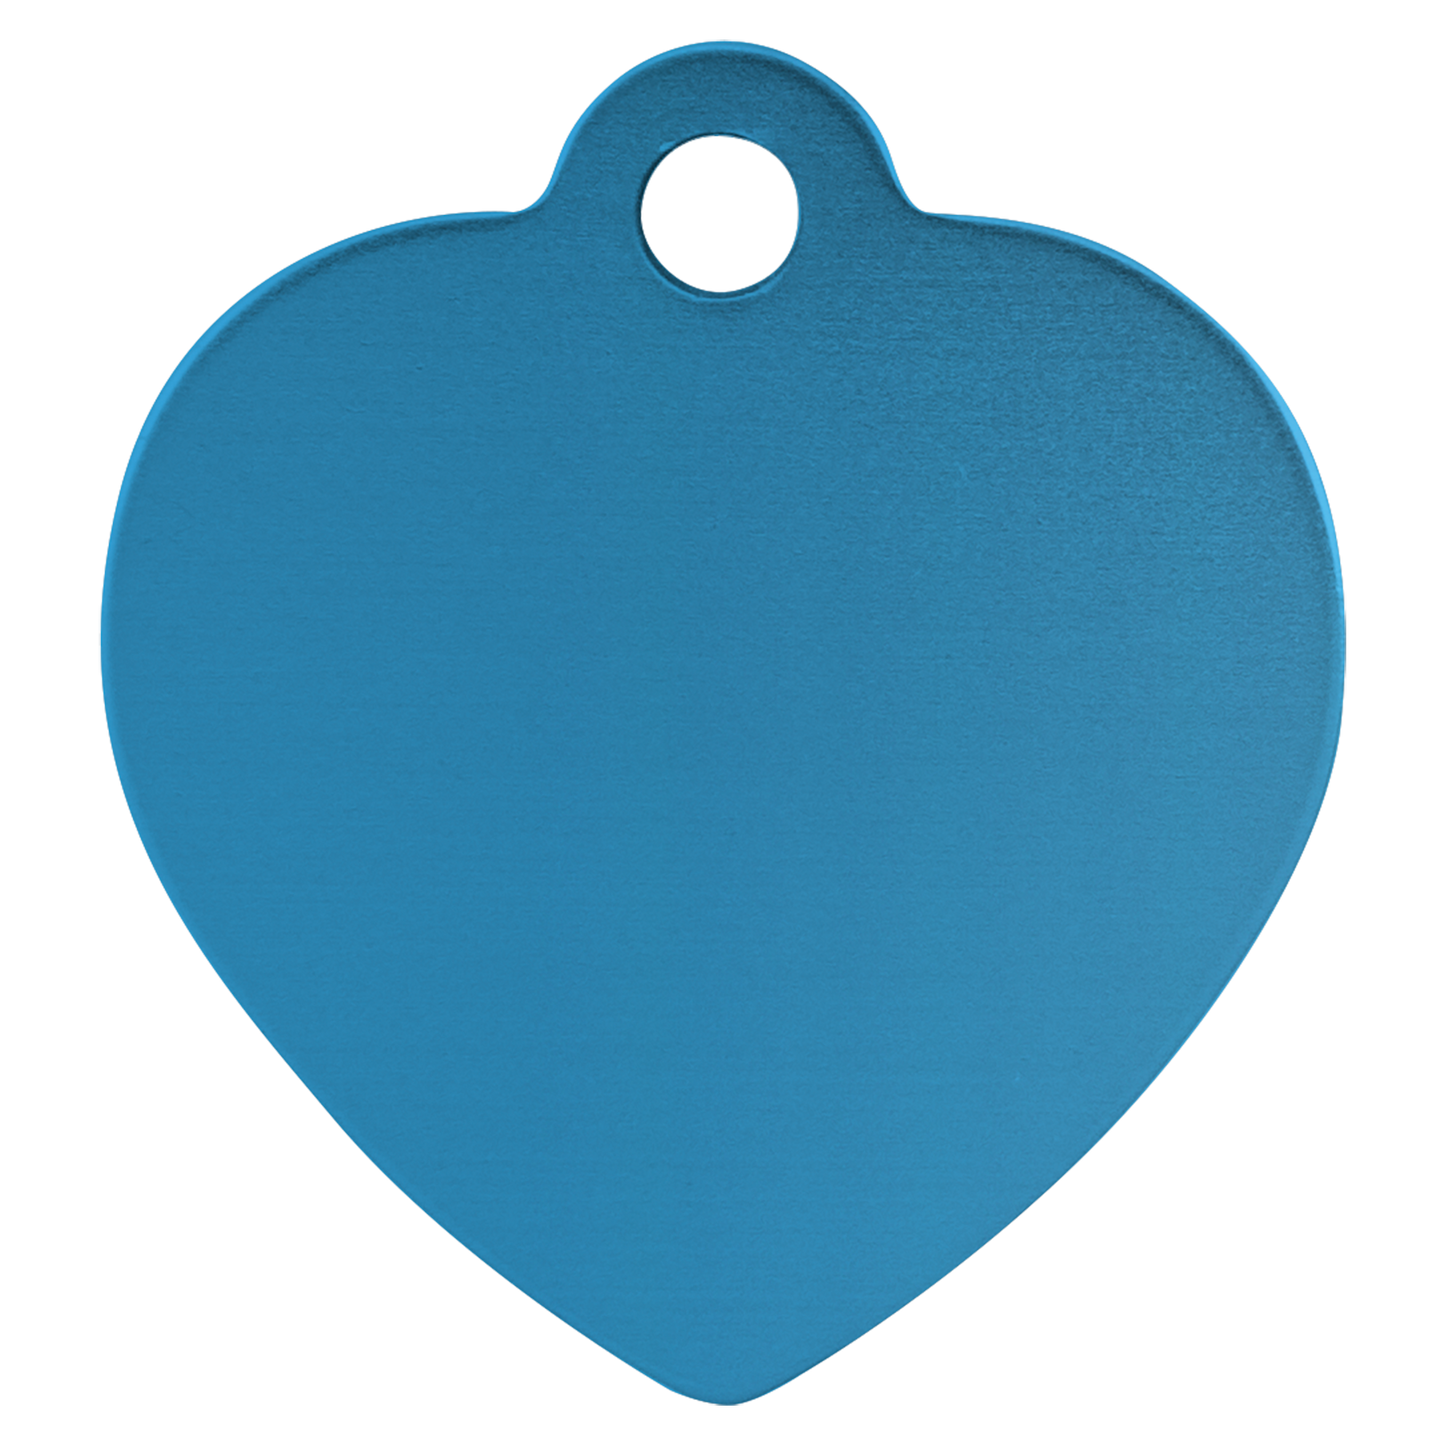 B.O.G.O. LARGE 1 1/4" x 1 1/4" Blue Anodized Aluminum Heart Pet Tag